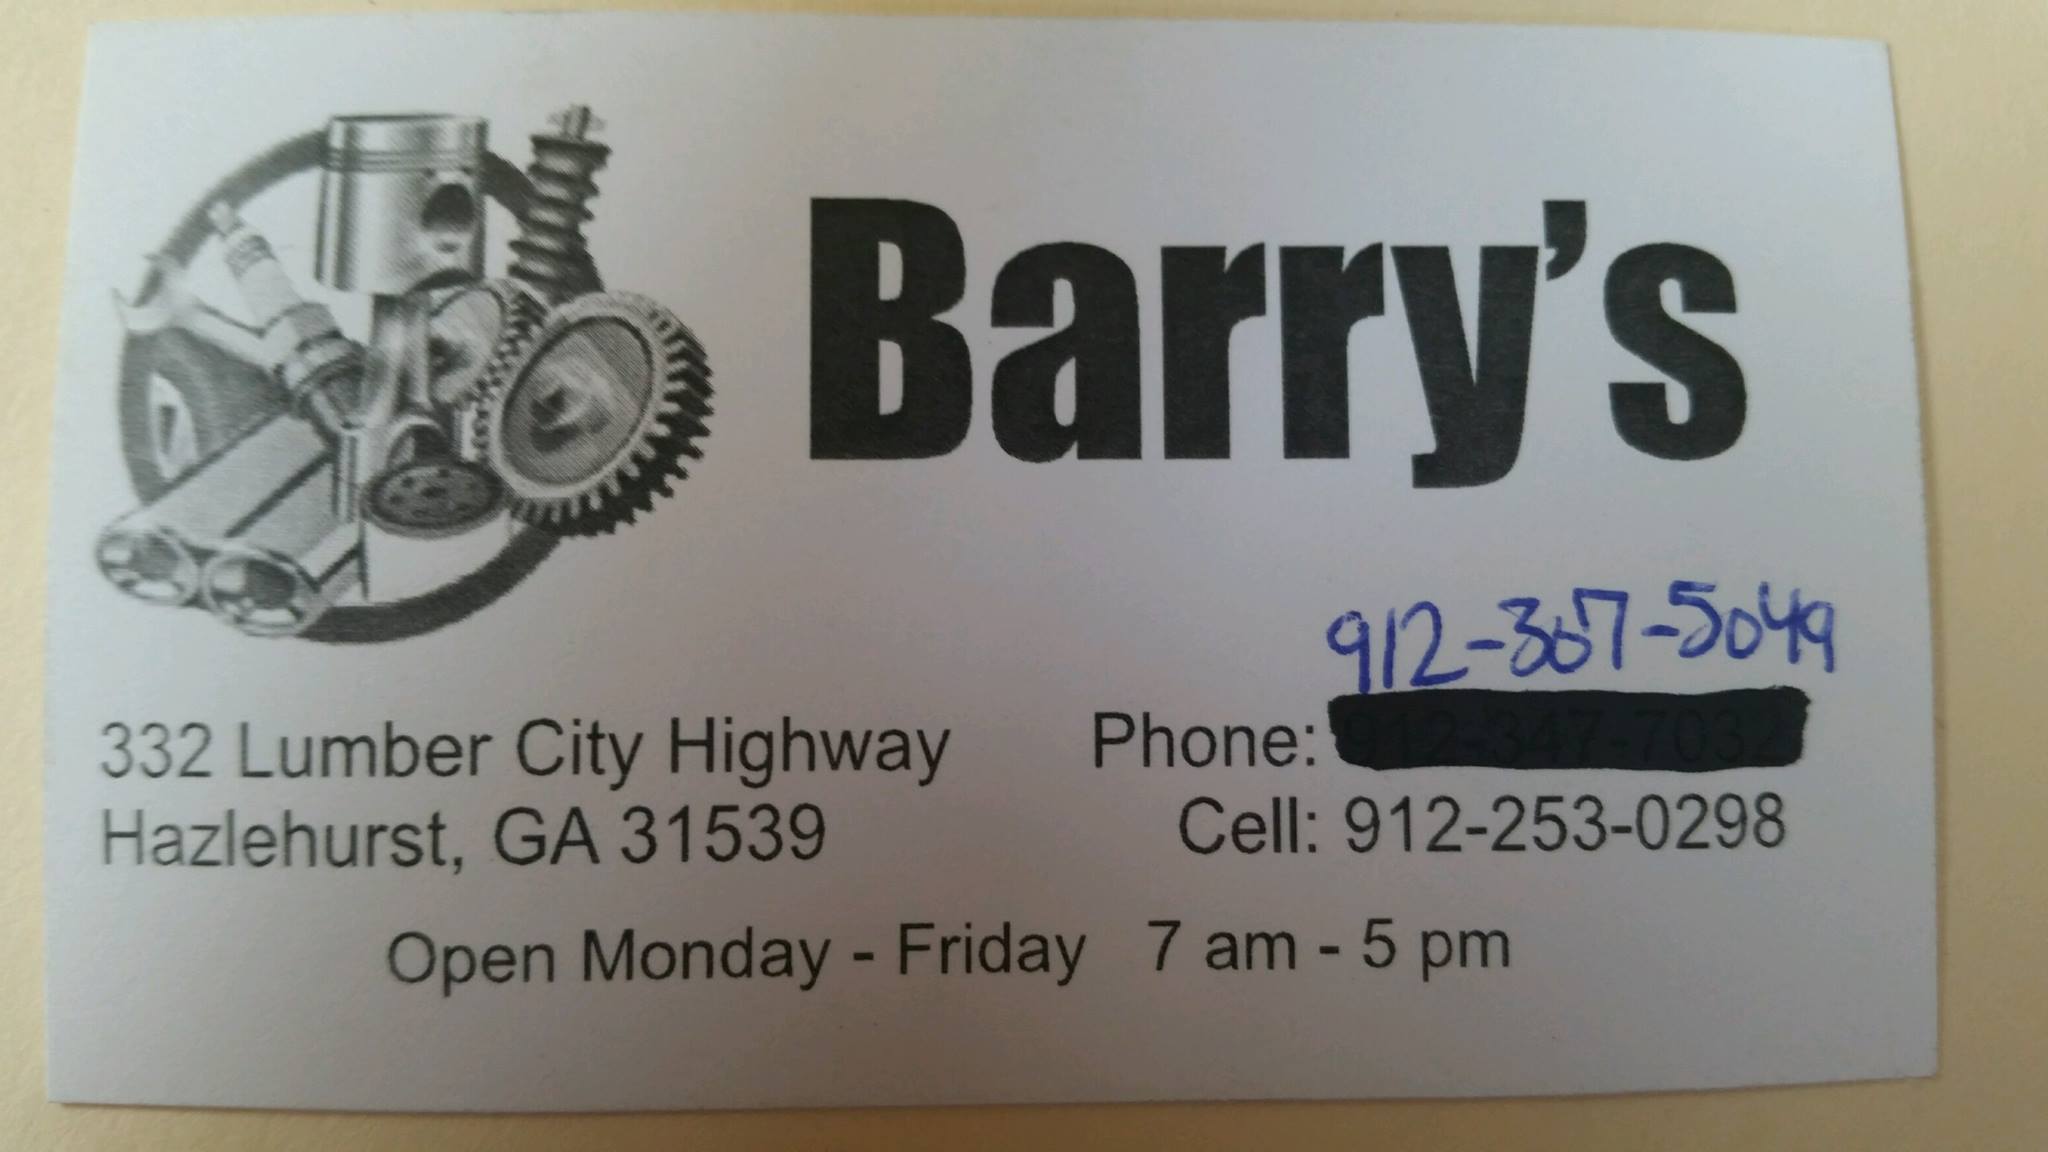 Barry's Auto Repair 332 Lumber City Hwy, Hazlehurst Georgia 31539